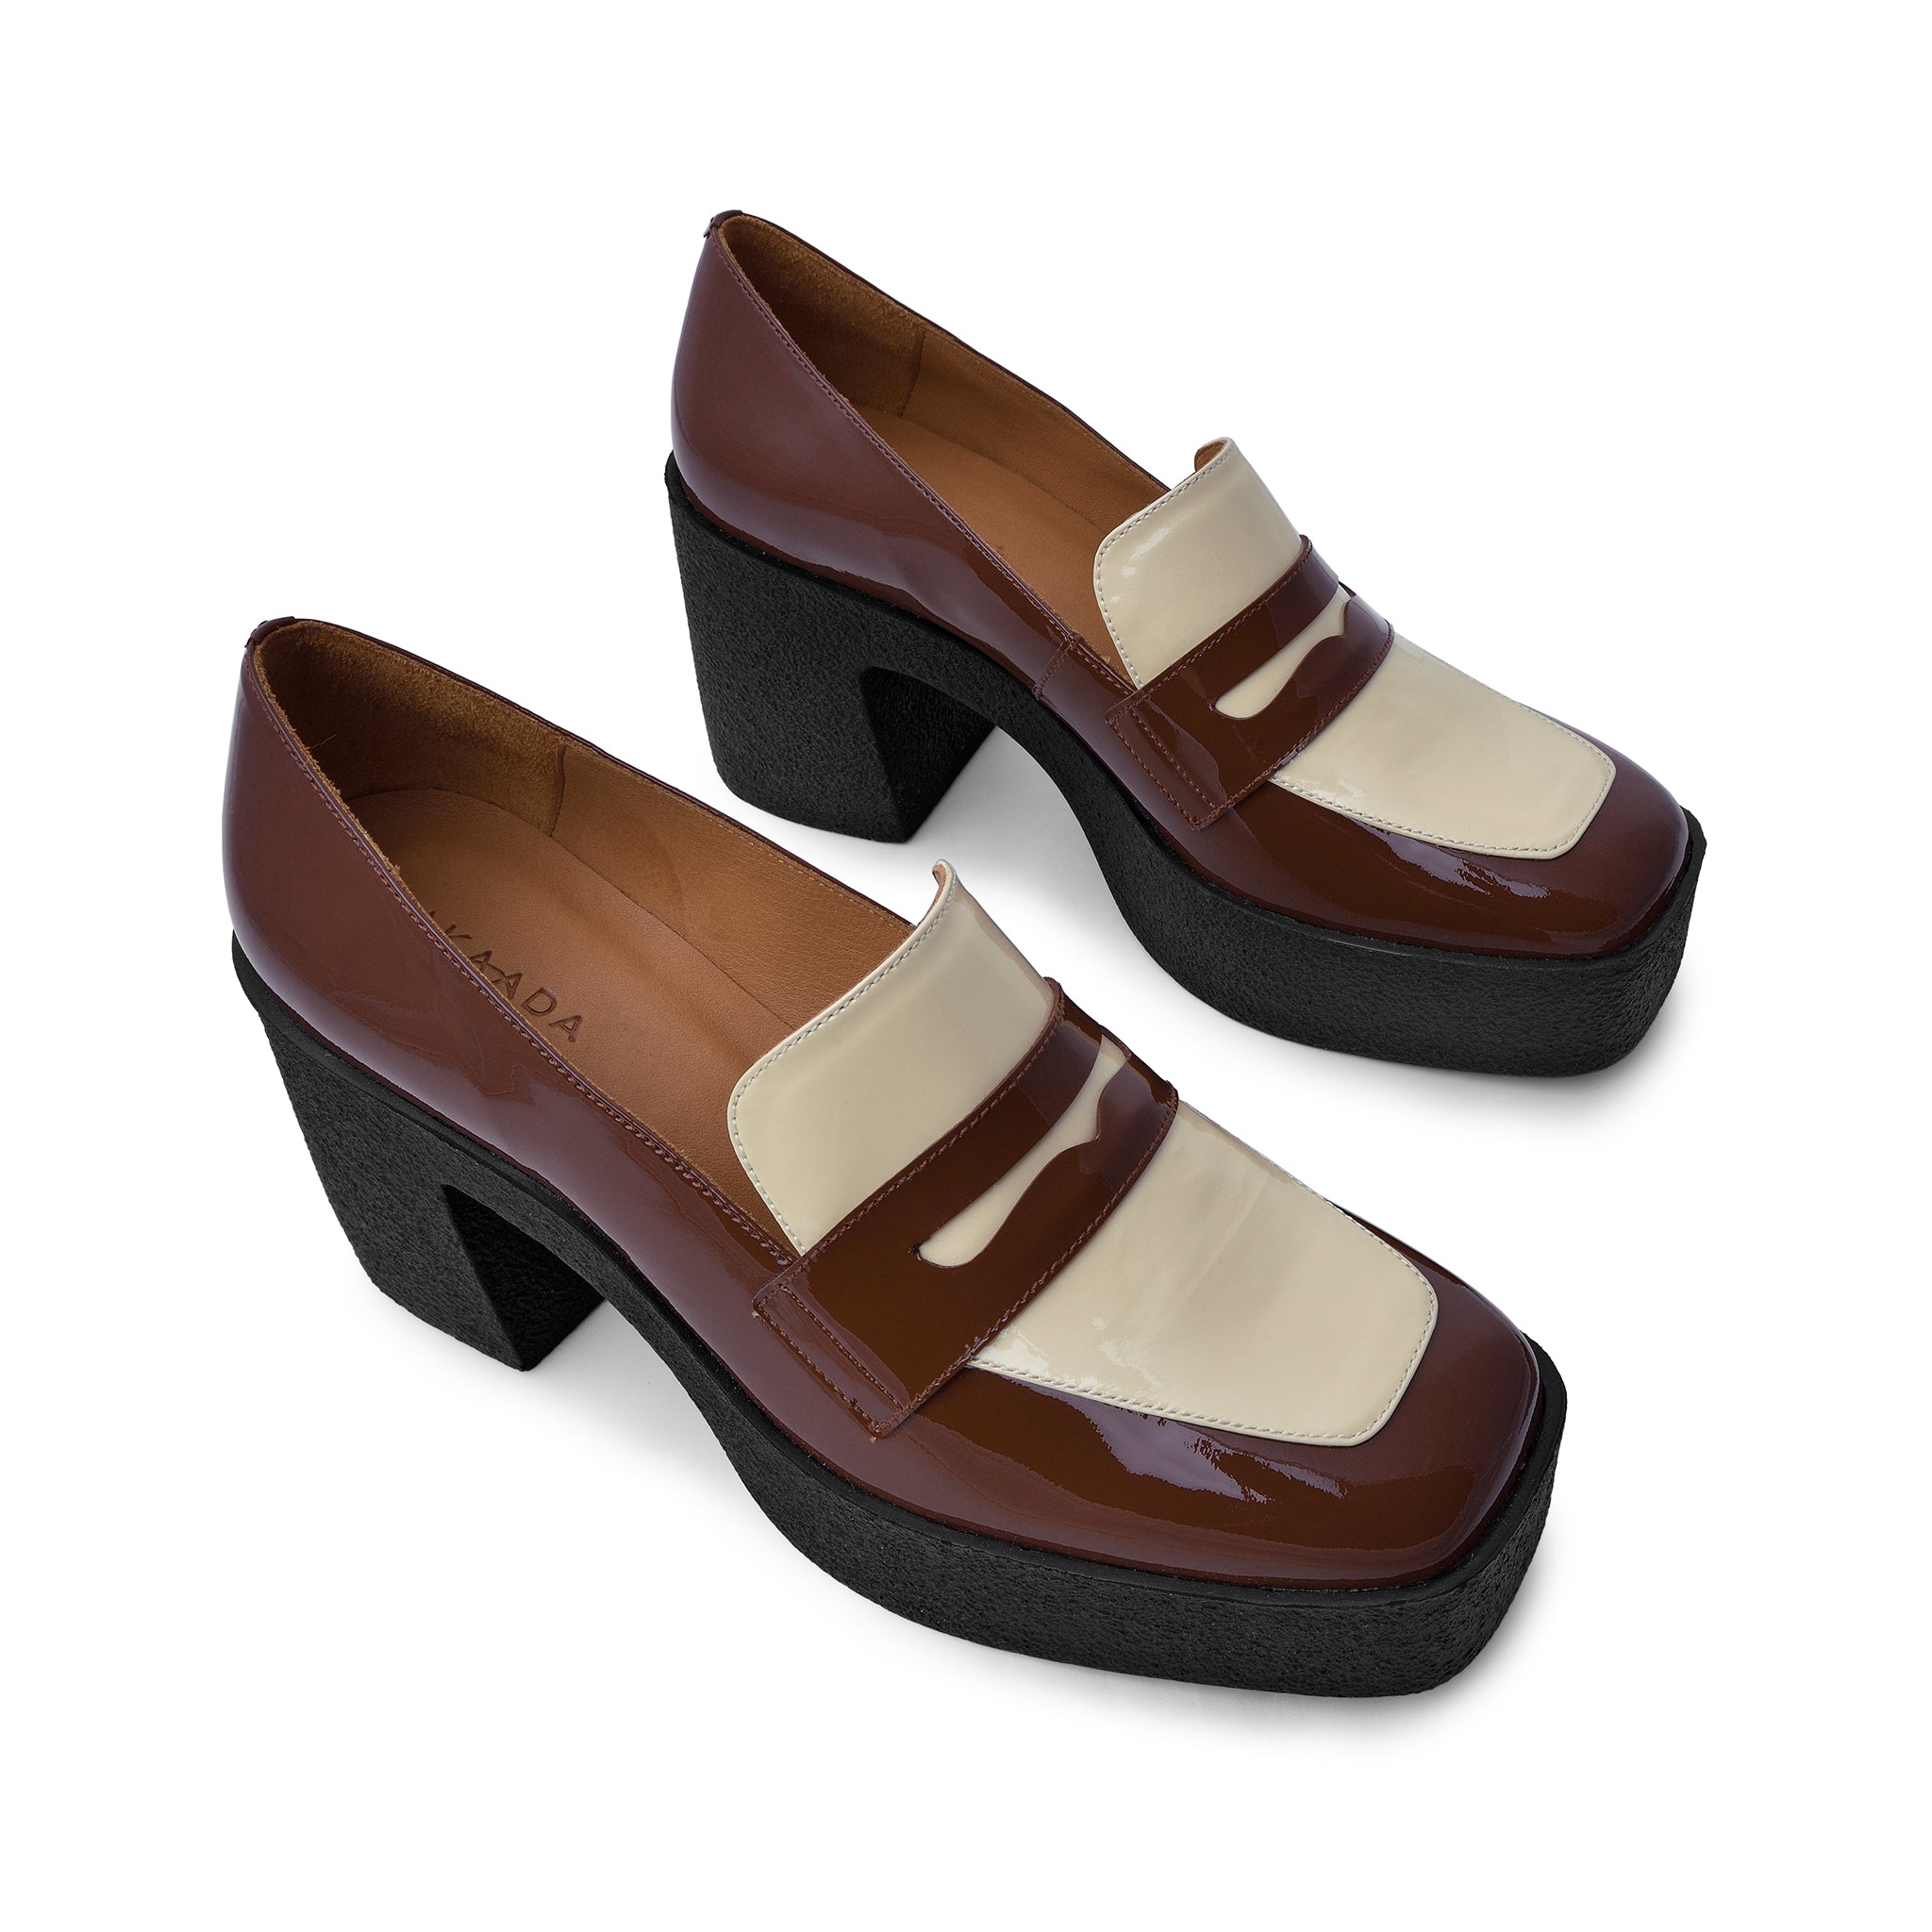 Yoko Caramel Cream Patent Leather Chunky Loafers 21031-01-05 - 6